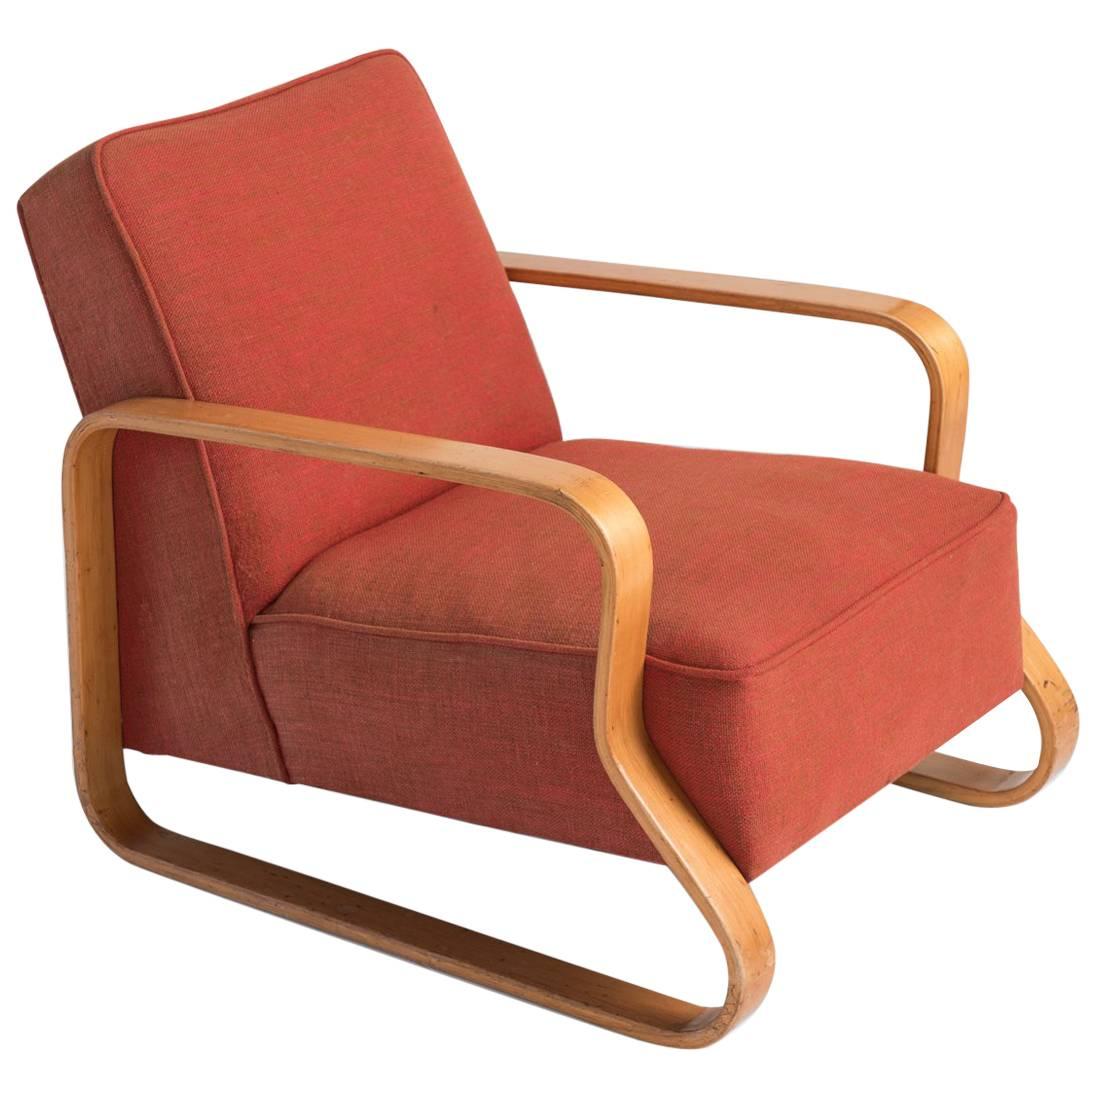 Model 44 Lounge Chair by Alvar Aalto, circa 1930